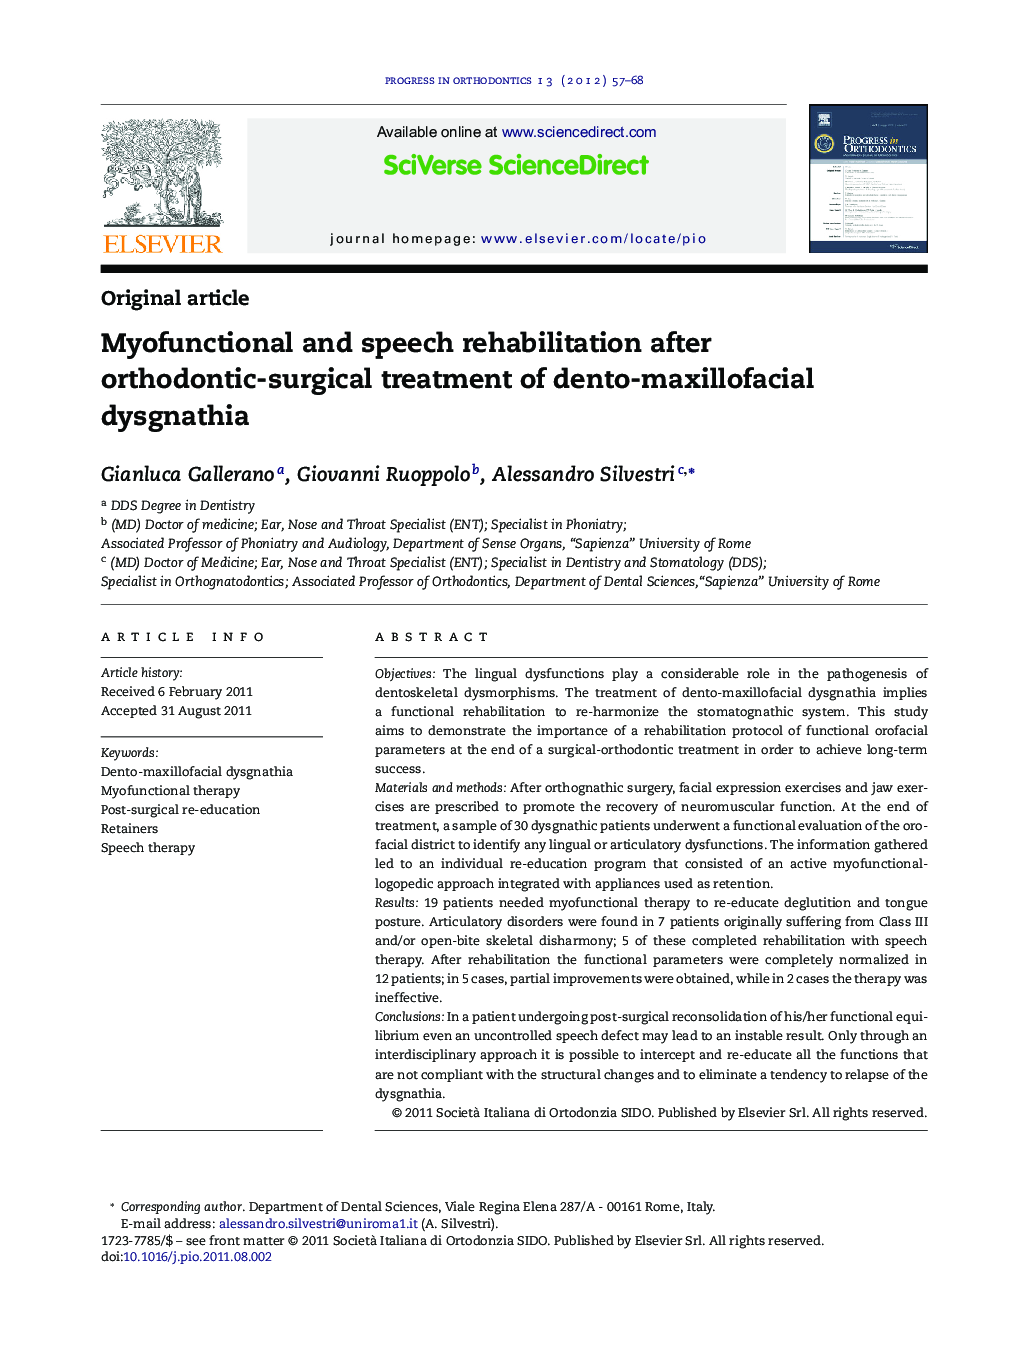 Myofunctional and speech rehabilitation after orthodontic-surgical treatment of dento-maxillofacial dysgnathia